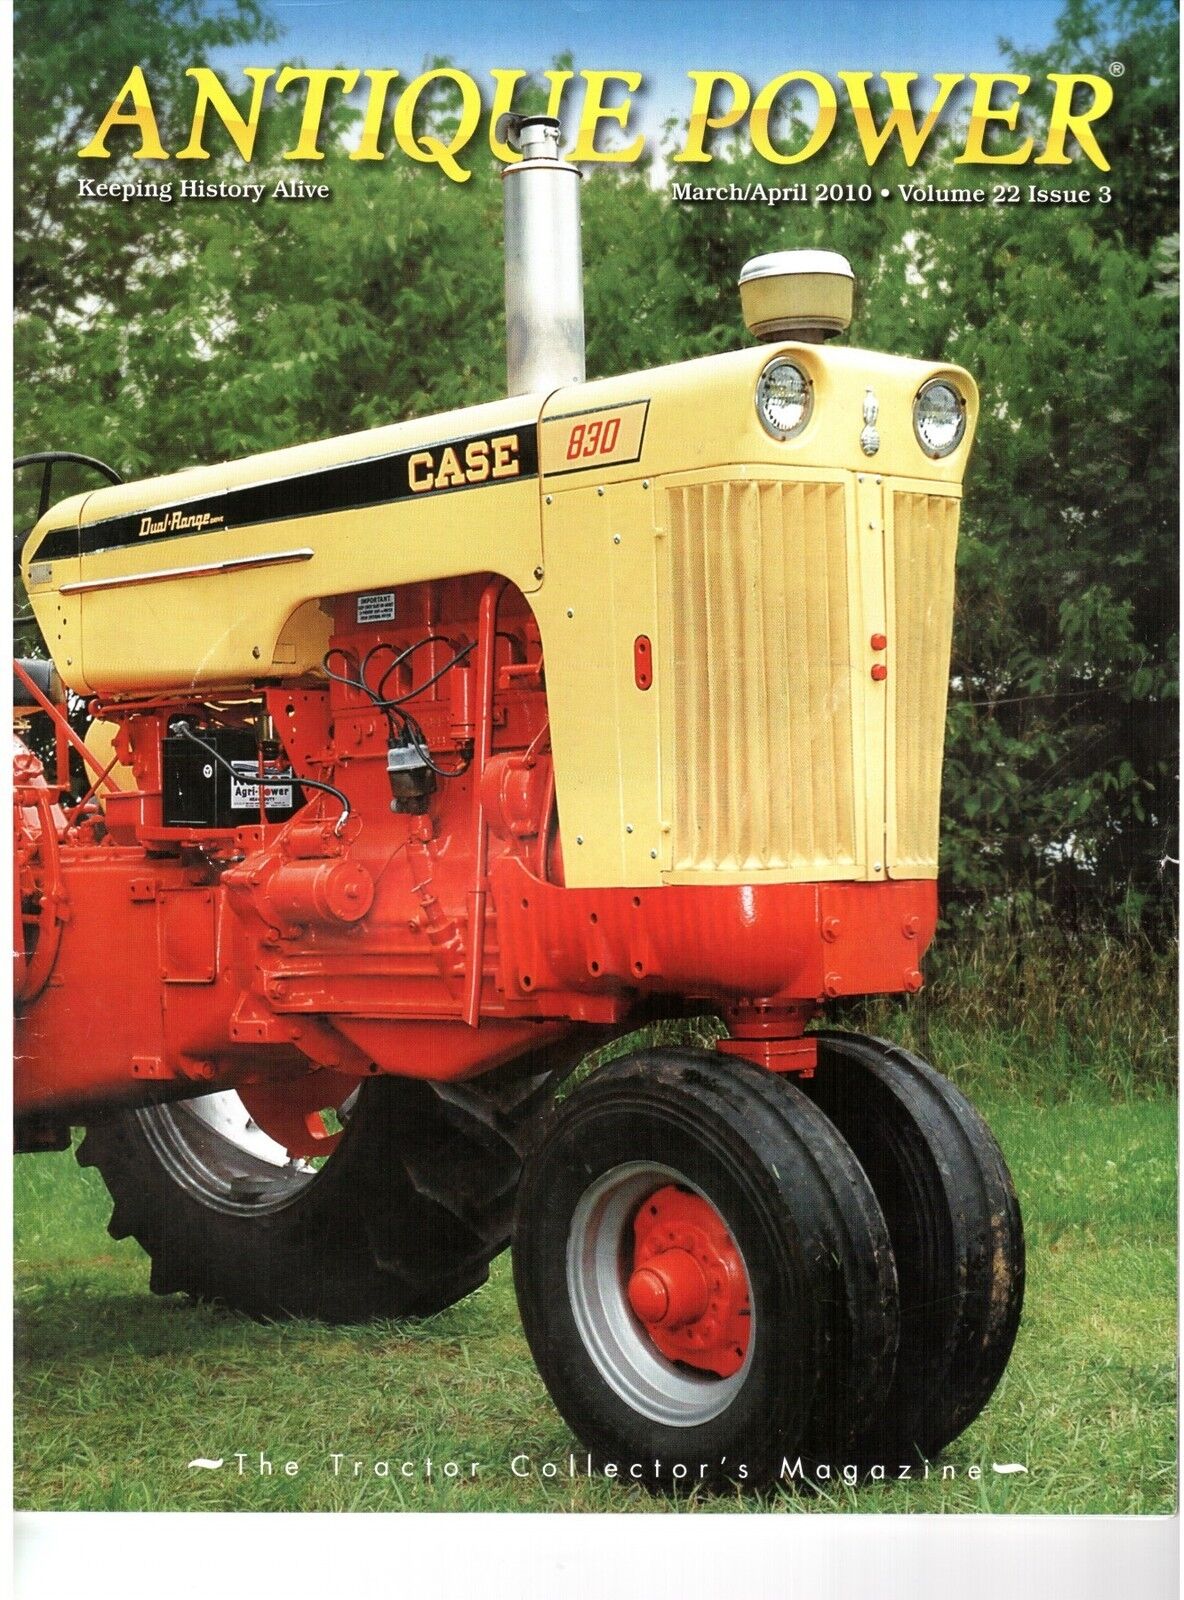 Case 830 Tractor - Winnipeg Motor Competition - International Harvester Model C